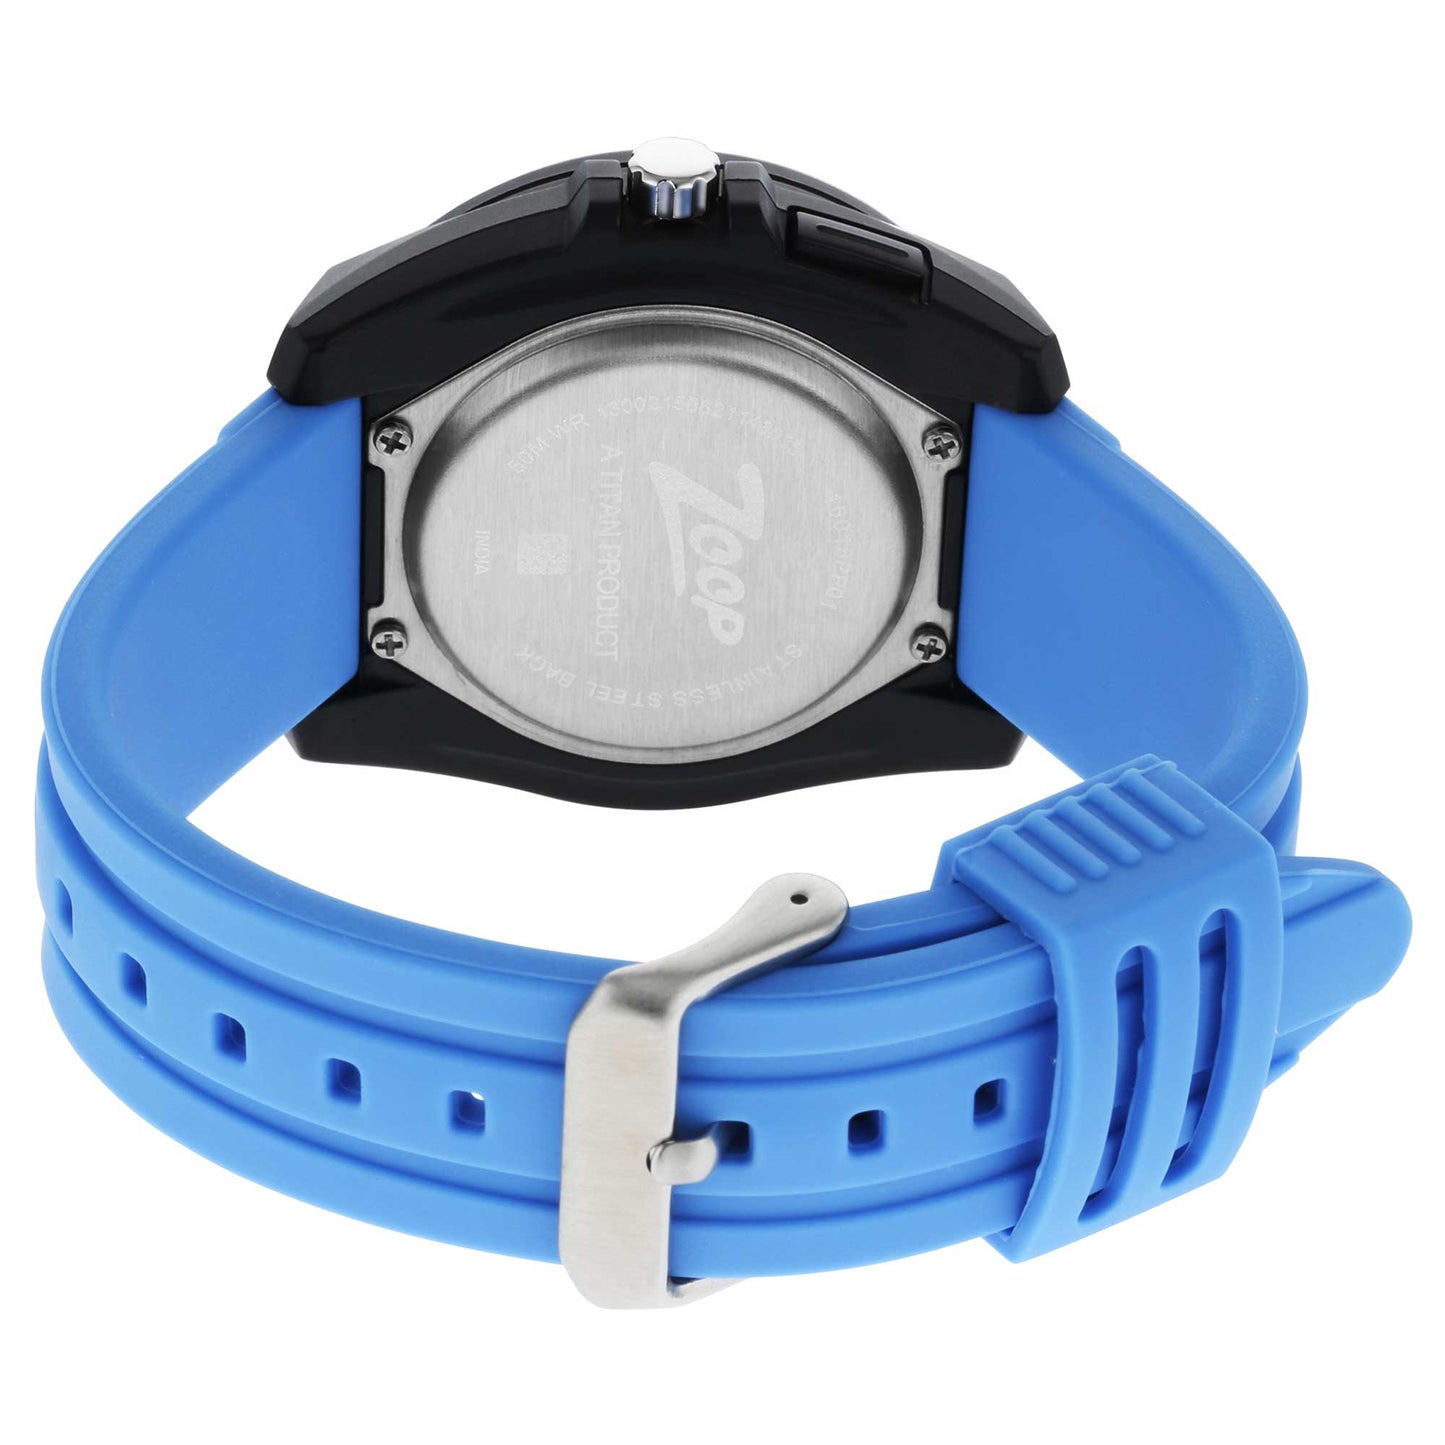 Zoop By Titan Quartz Analog Black Dial Silicone Strap Watch for Kids